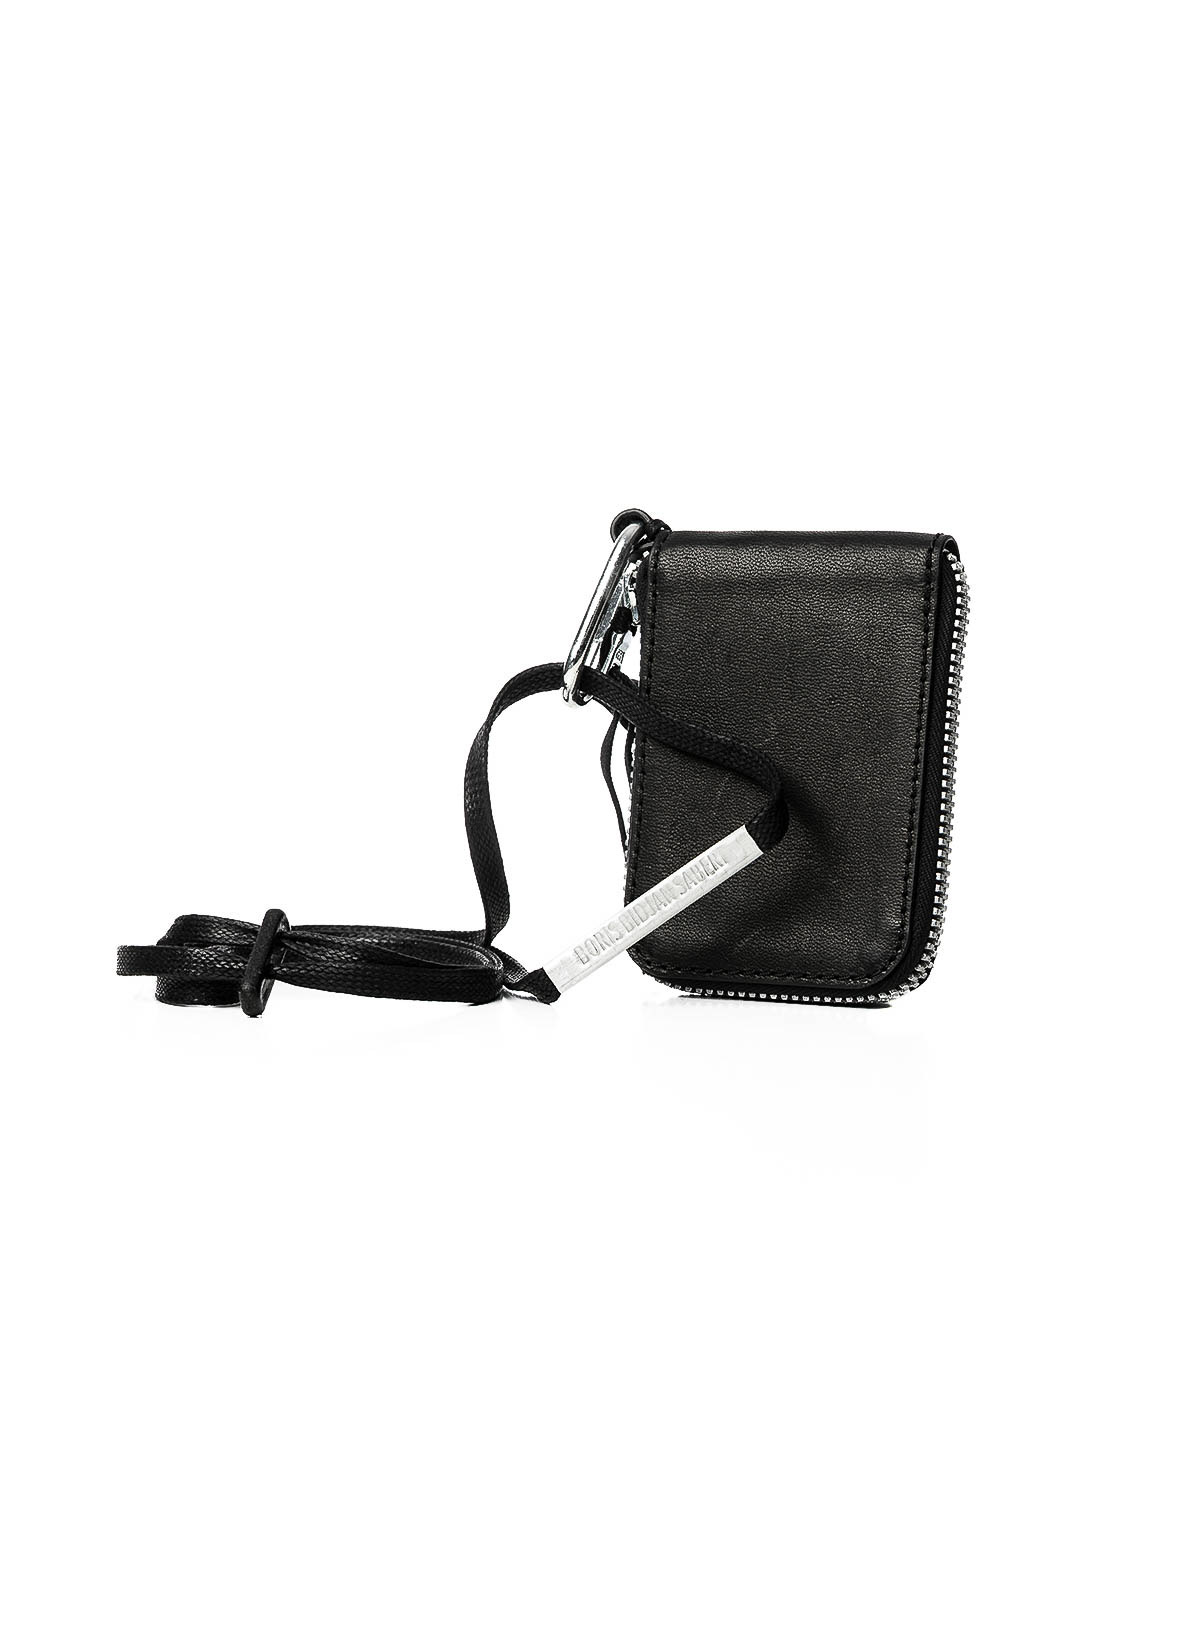 BORIS BIDJAN SABERI wallet WALLET2, black horse leather exclusively